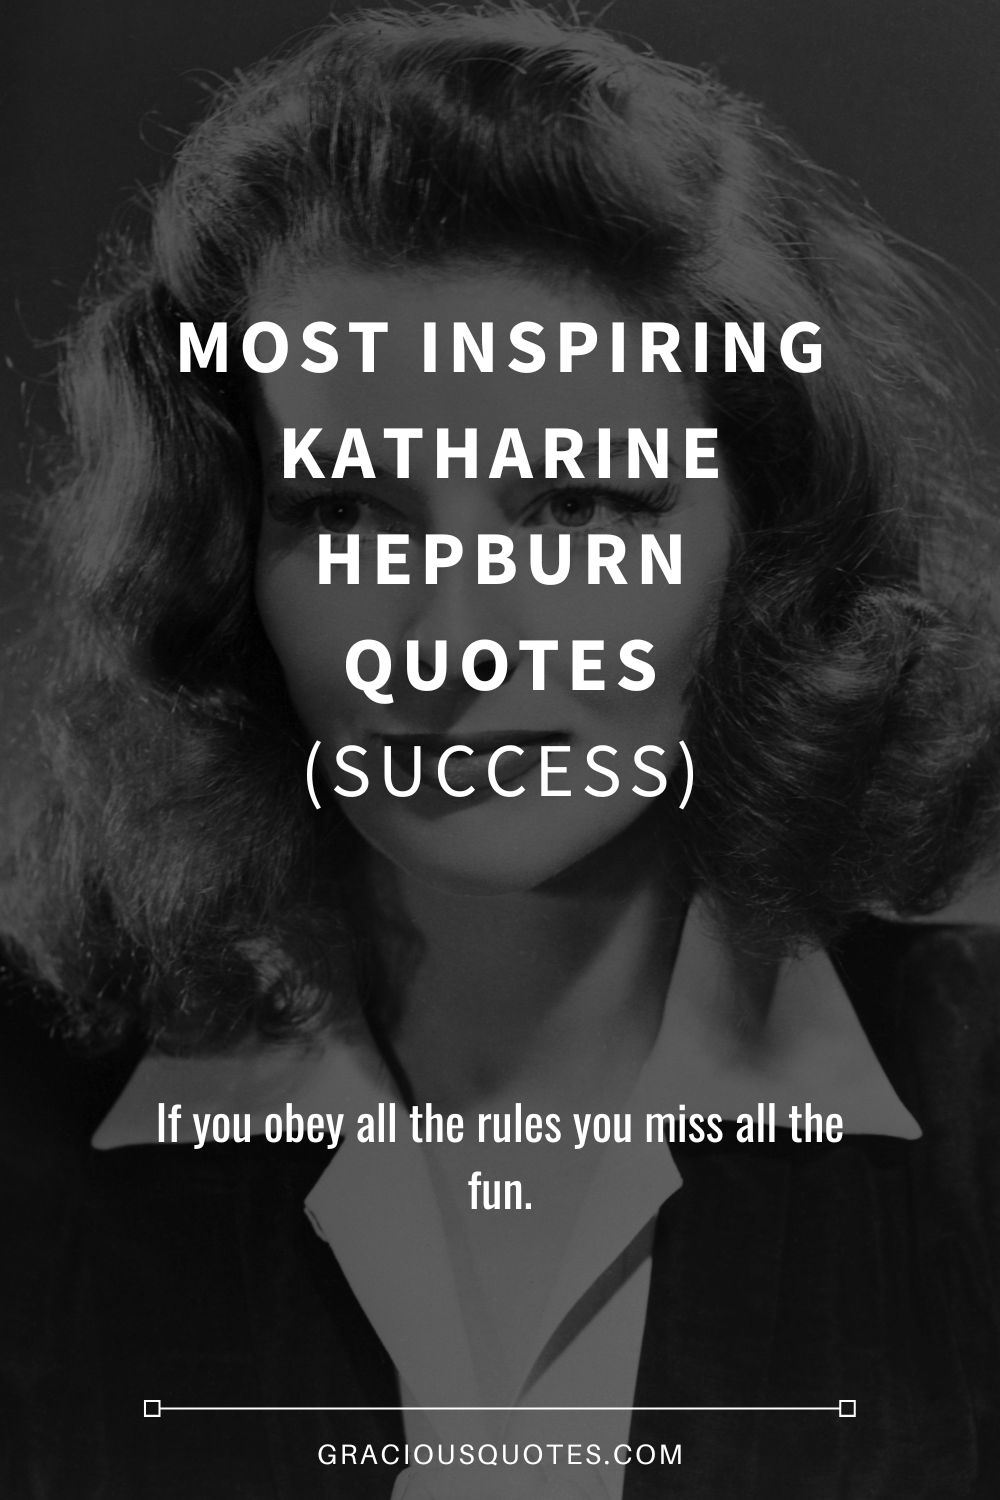 Most Inspiring Katharine Hepburn Quotes (SUCCESS) - Gracious Quotes